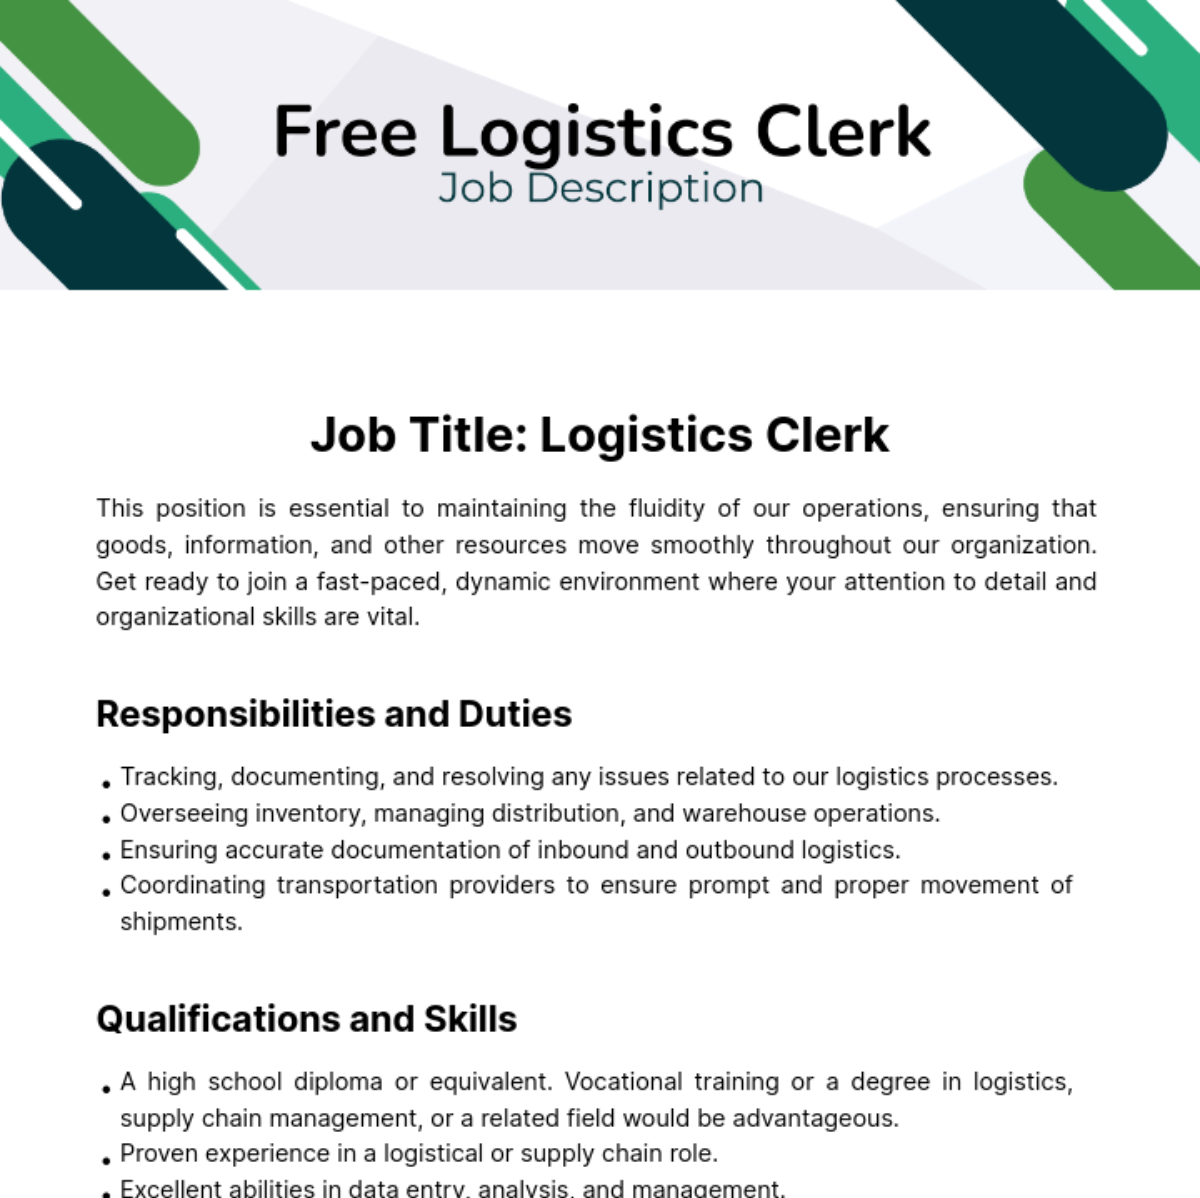 Free Logistics Clerk Job Description Template